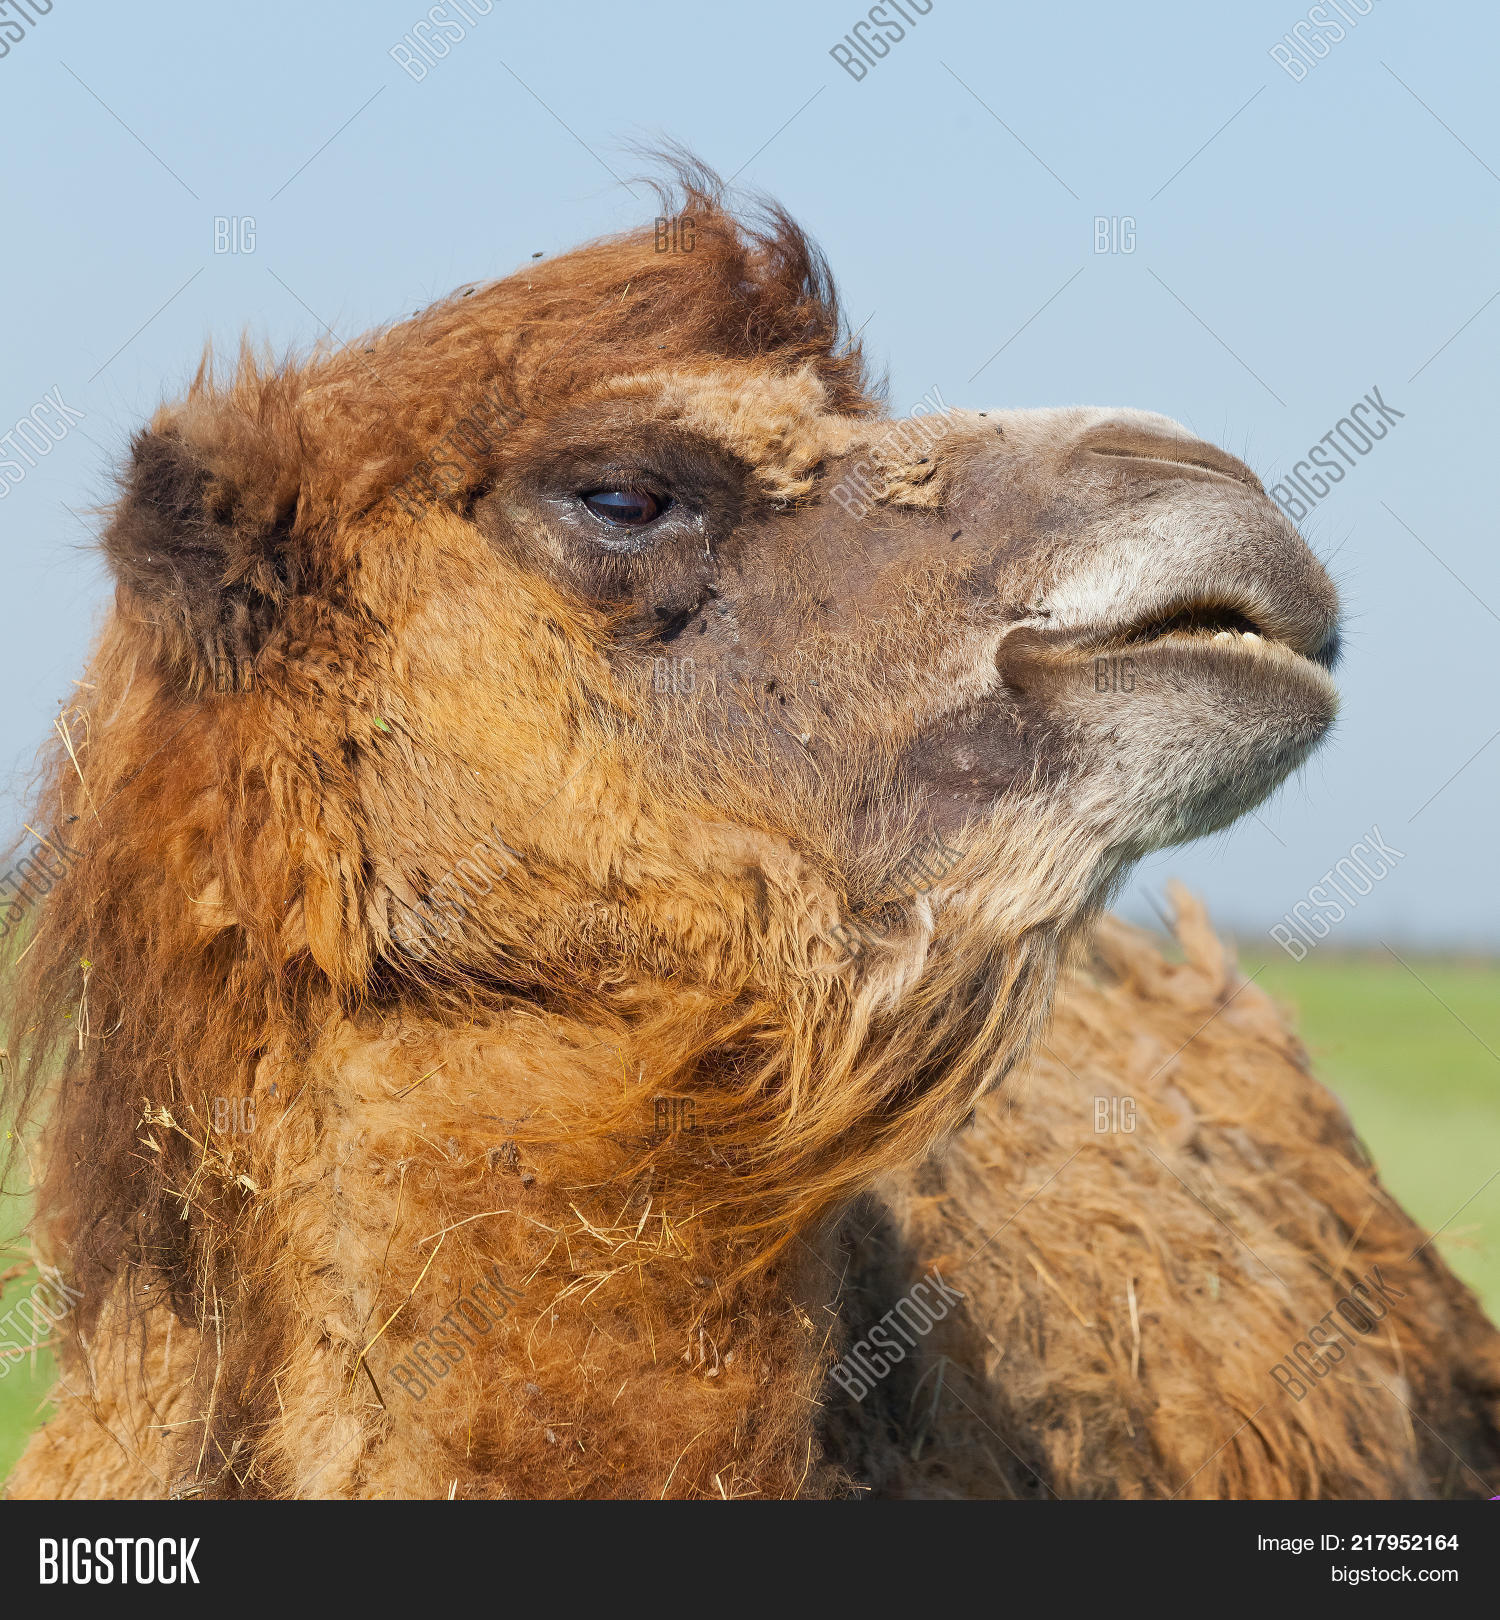 Portrait Big Sad Camel Drop Tears Image & Photo | Bigstock